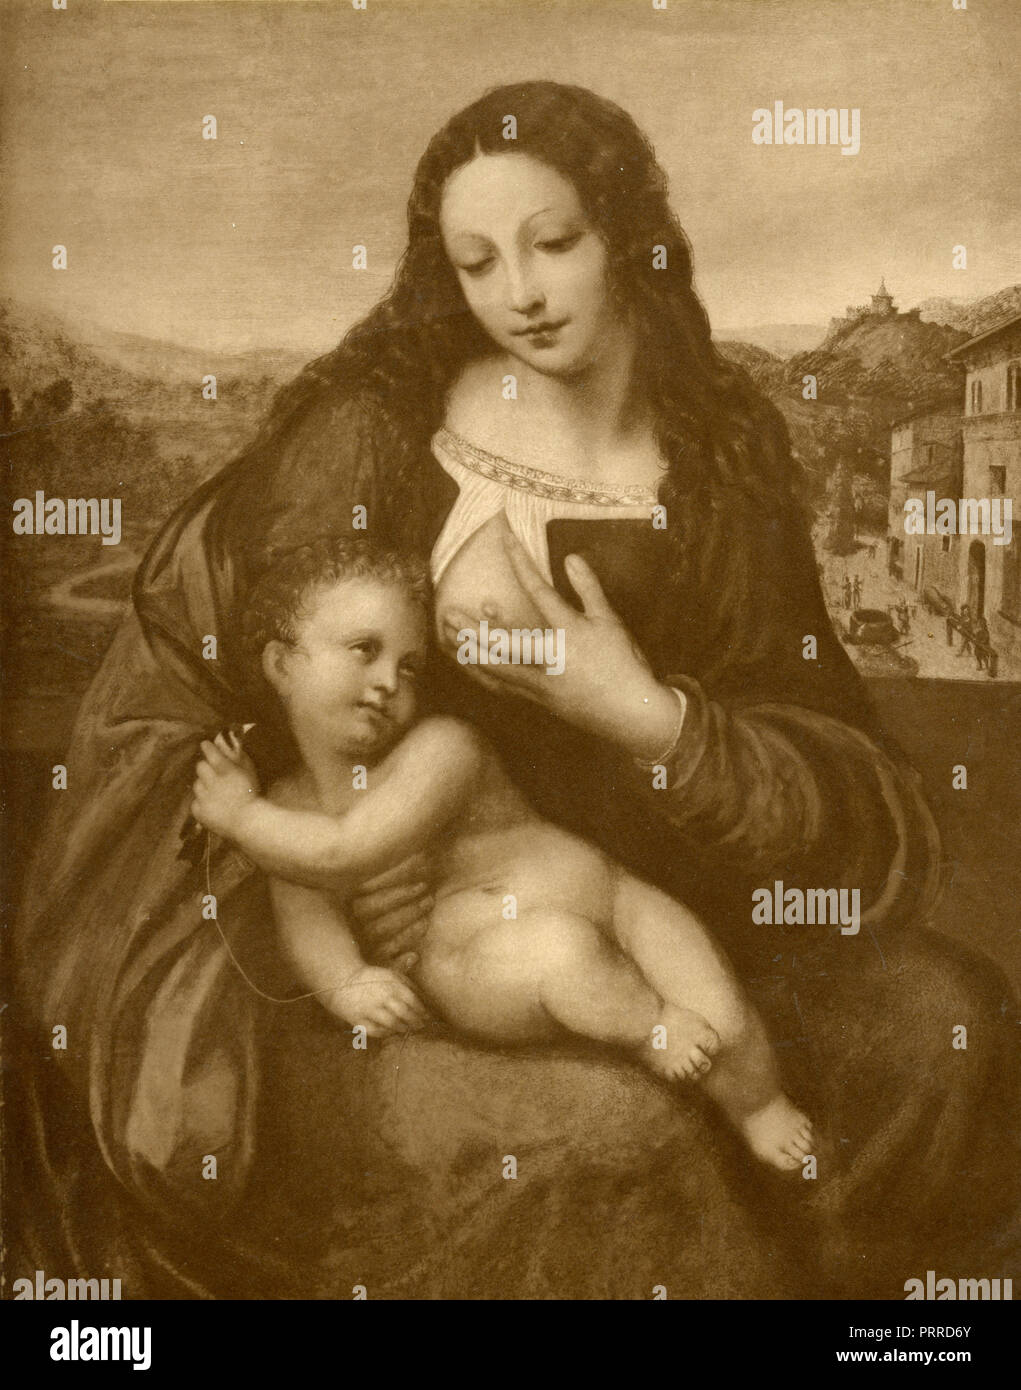 Madonna with baby Jesus, painting by Giampedrini, 1910s Stock Photo